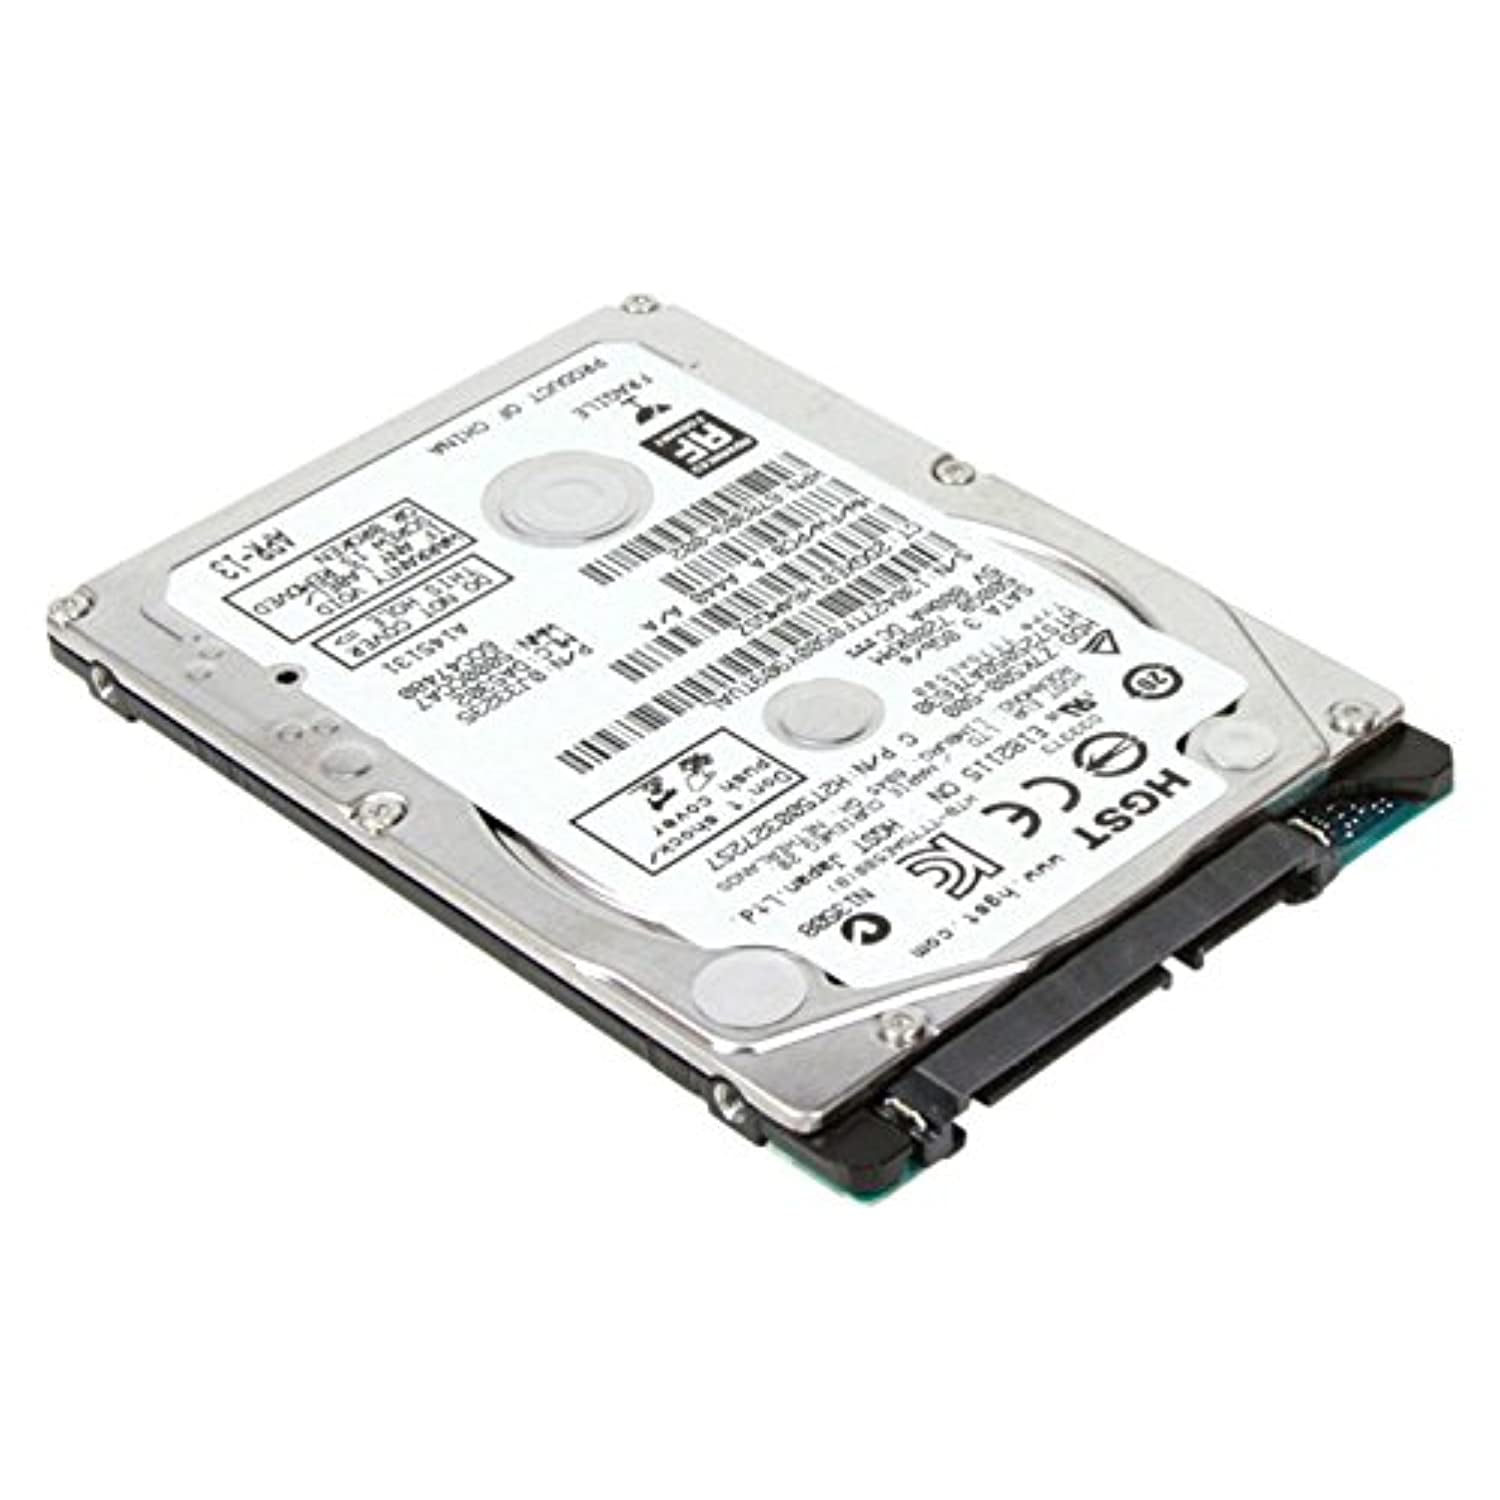 HP 633252-001 750GB SATA hard disk drive - 7,200 RPM, 2.5-inch form